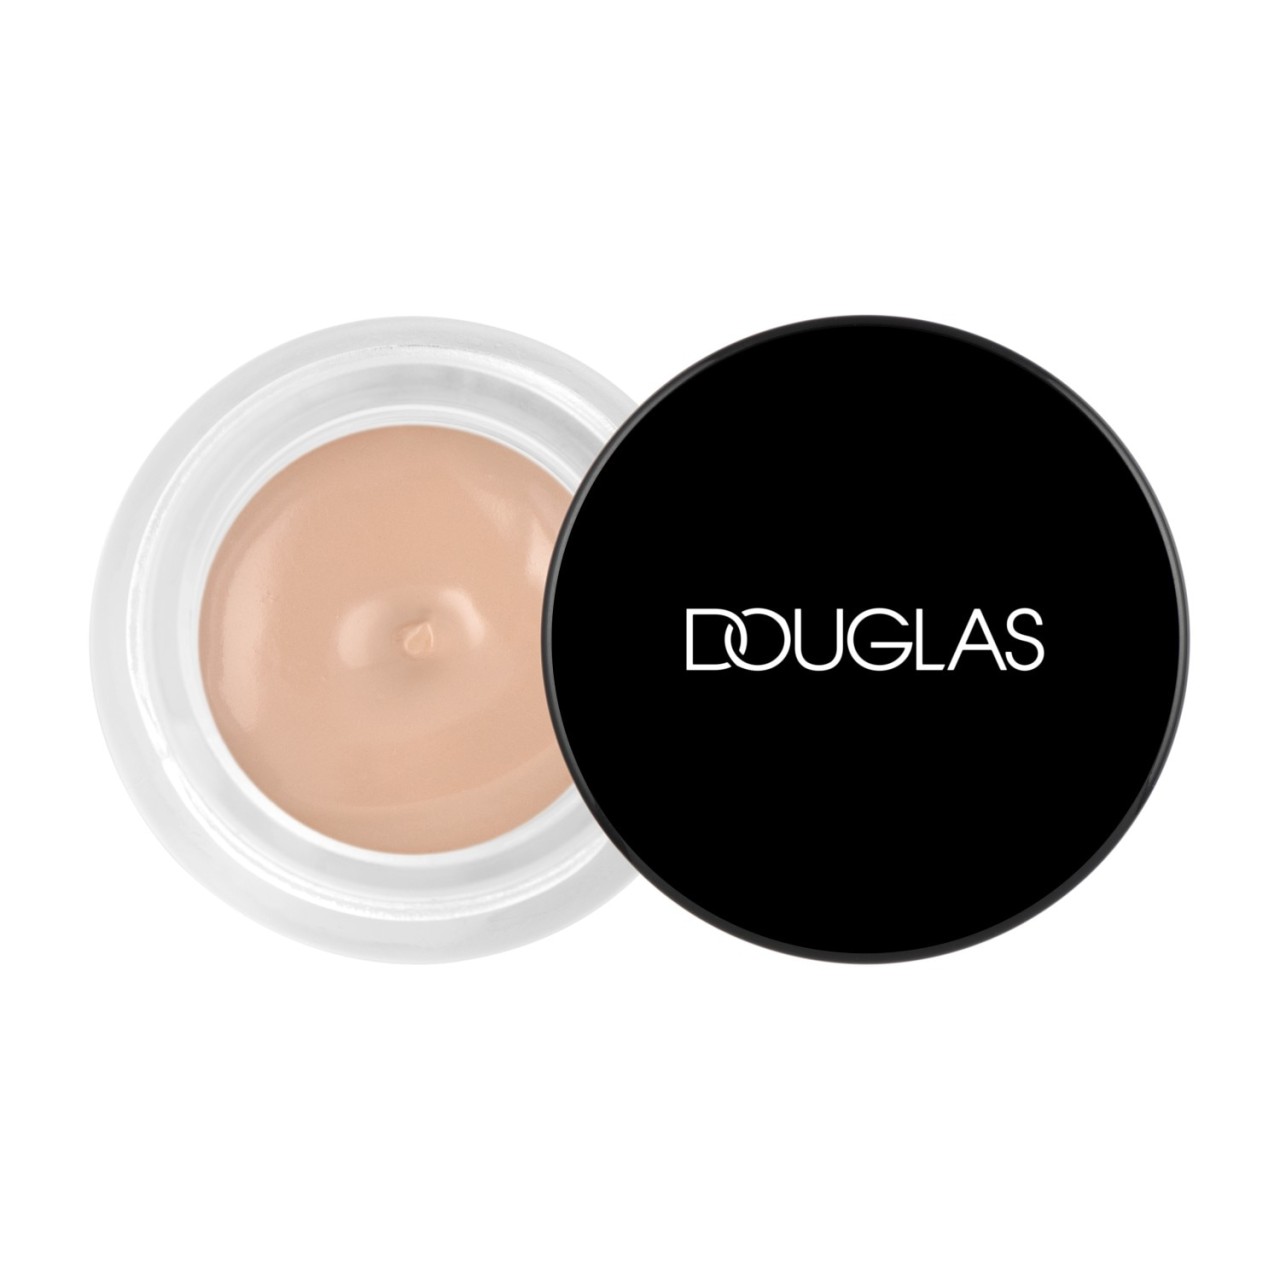 Douglas Collection - Eye Optimizing Full Coverage Concealer -  5